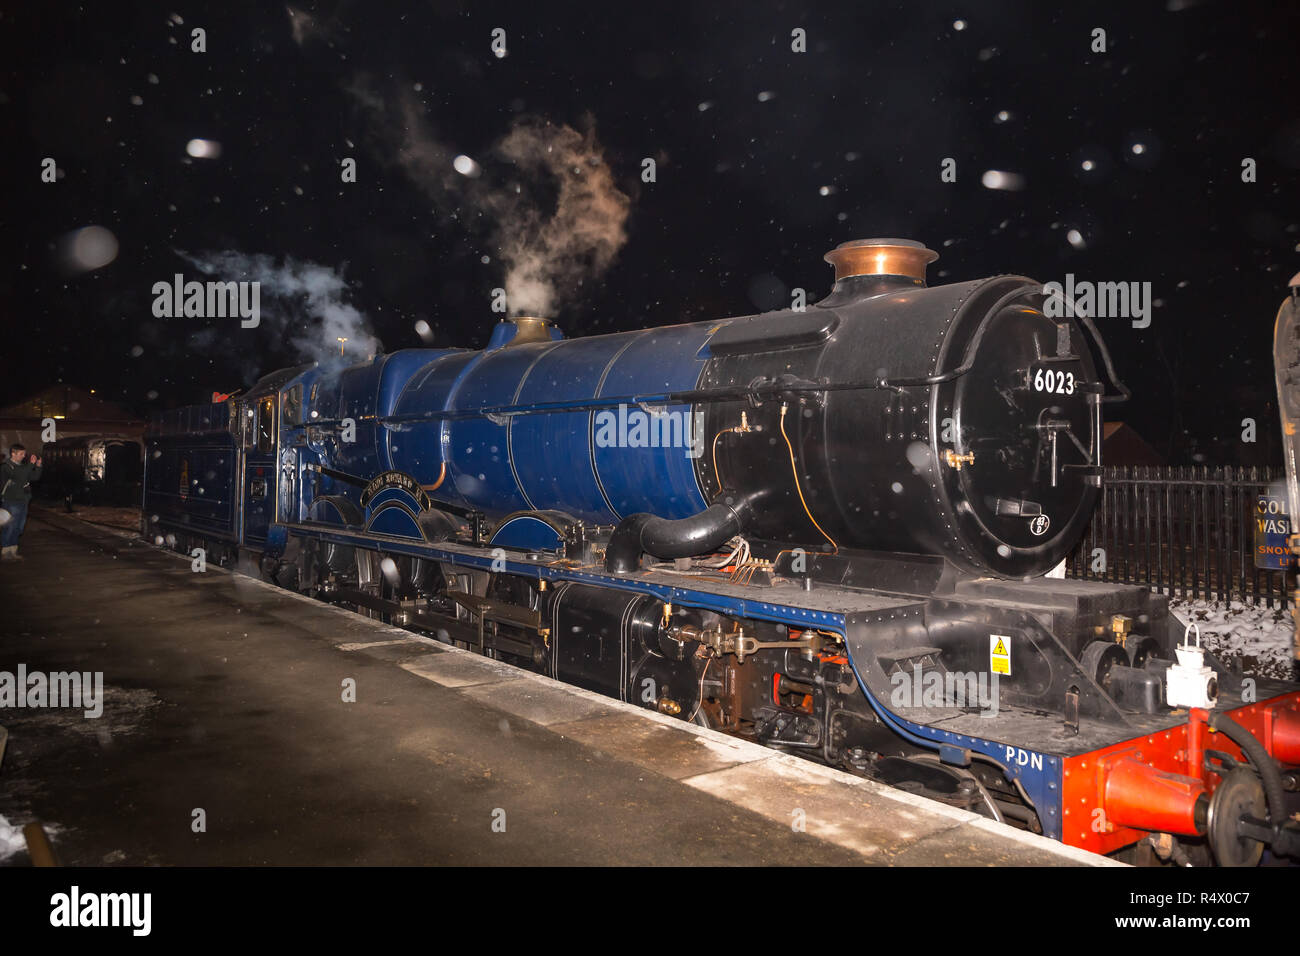 Vintage UK steam locomotive King Edward II, front view, alongside platform at Kidderminster SVR station, in the dark, snow flakes falling. Stock Photo